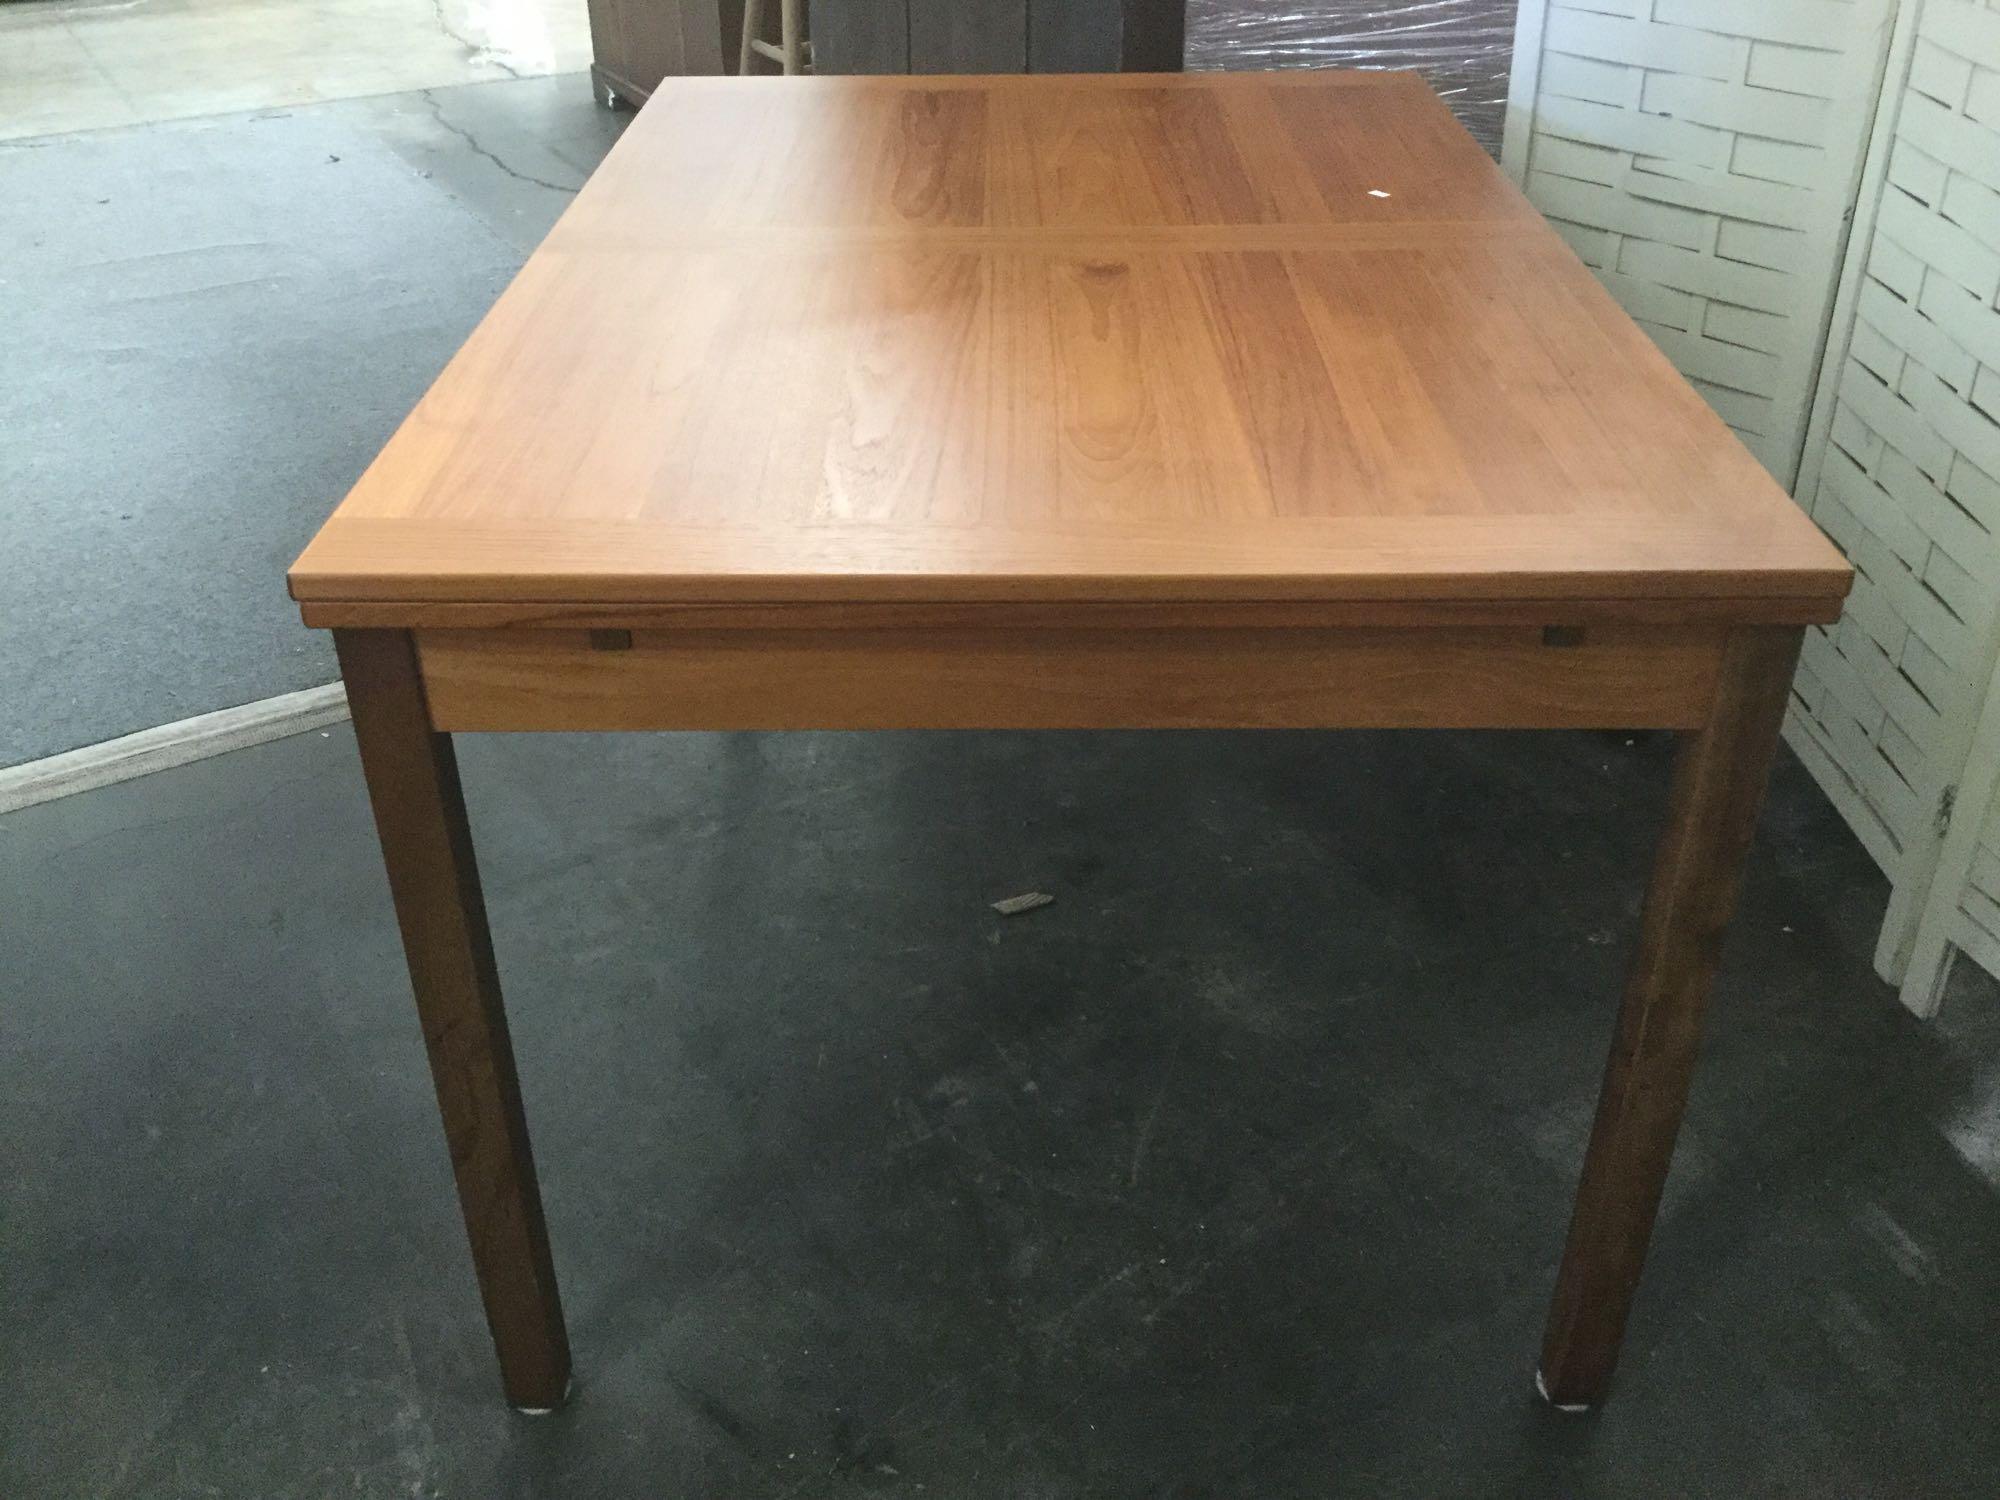 Modern mid century style maple extending dining table made in Denmark